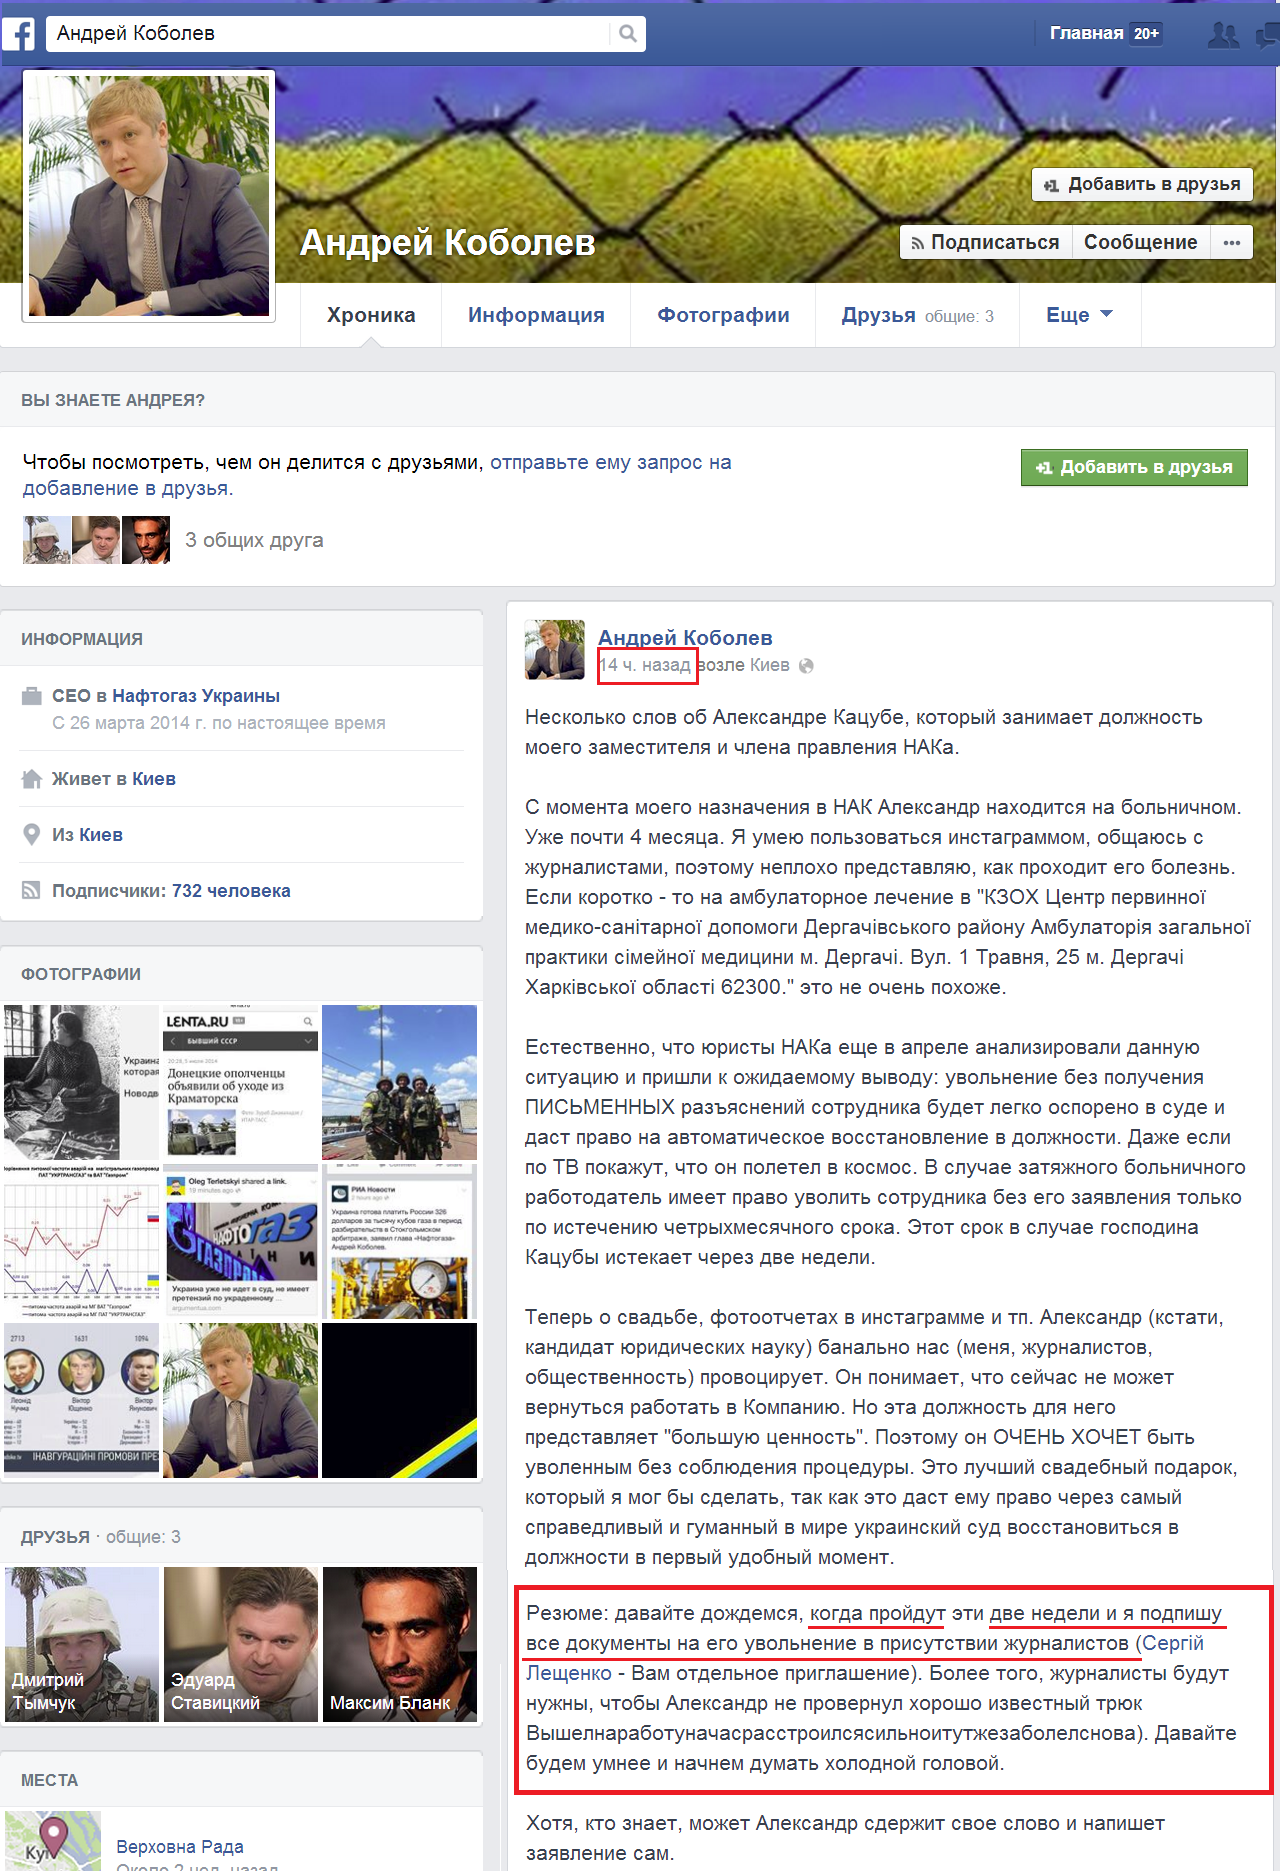 https://www.facebook.com/andriy.kobolyev?hc_location=timeline